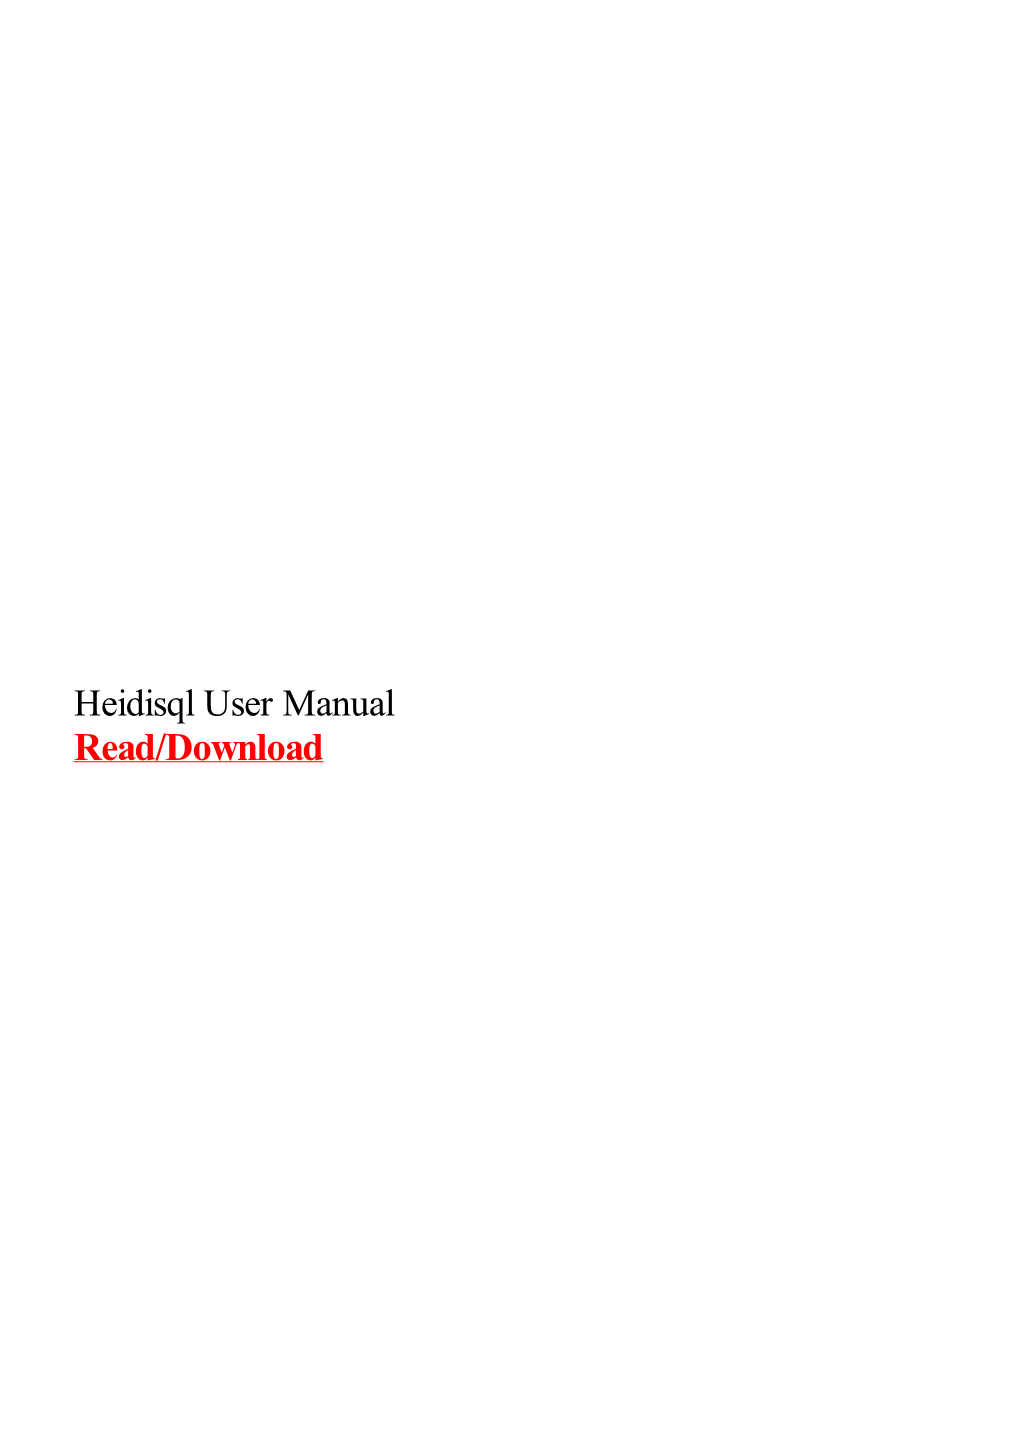 Heidisql User Manual